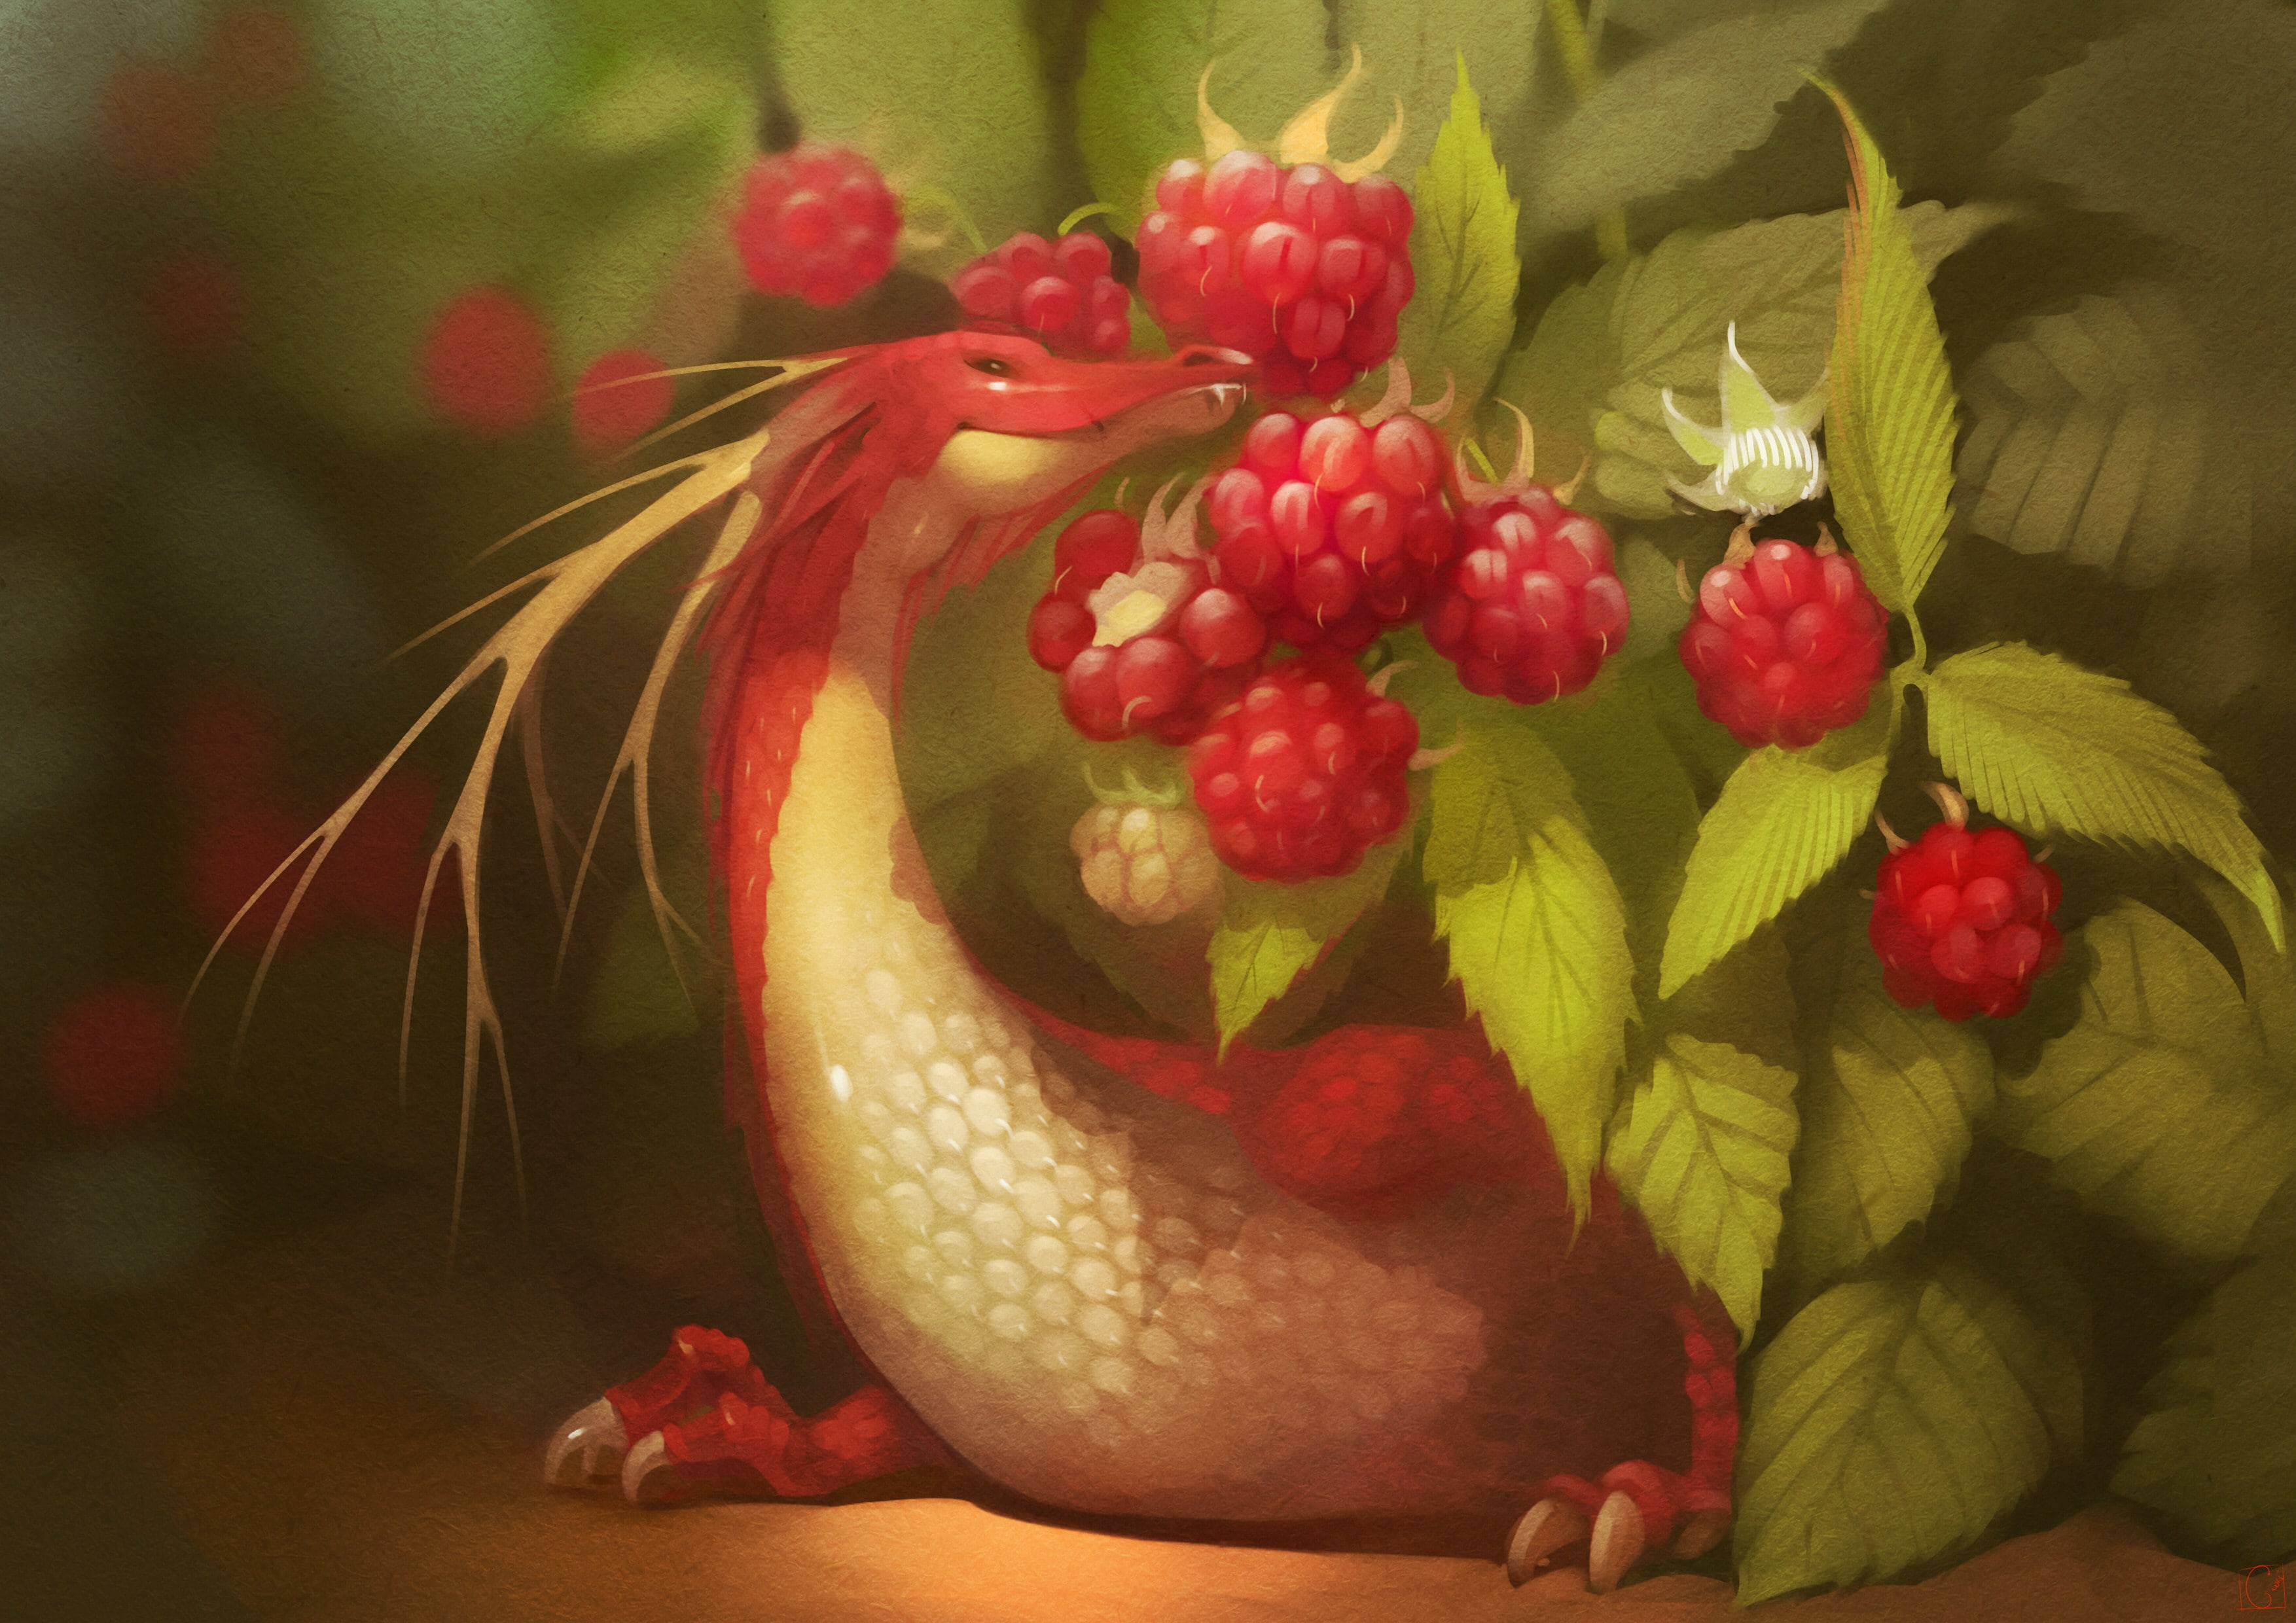 digital art fantasy art dragon rasberry, fruit, red, food, healthy eating